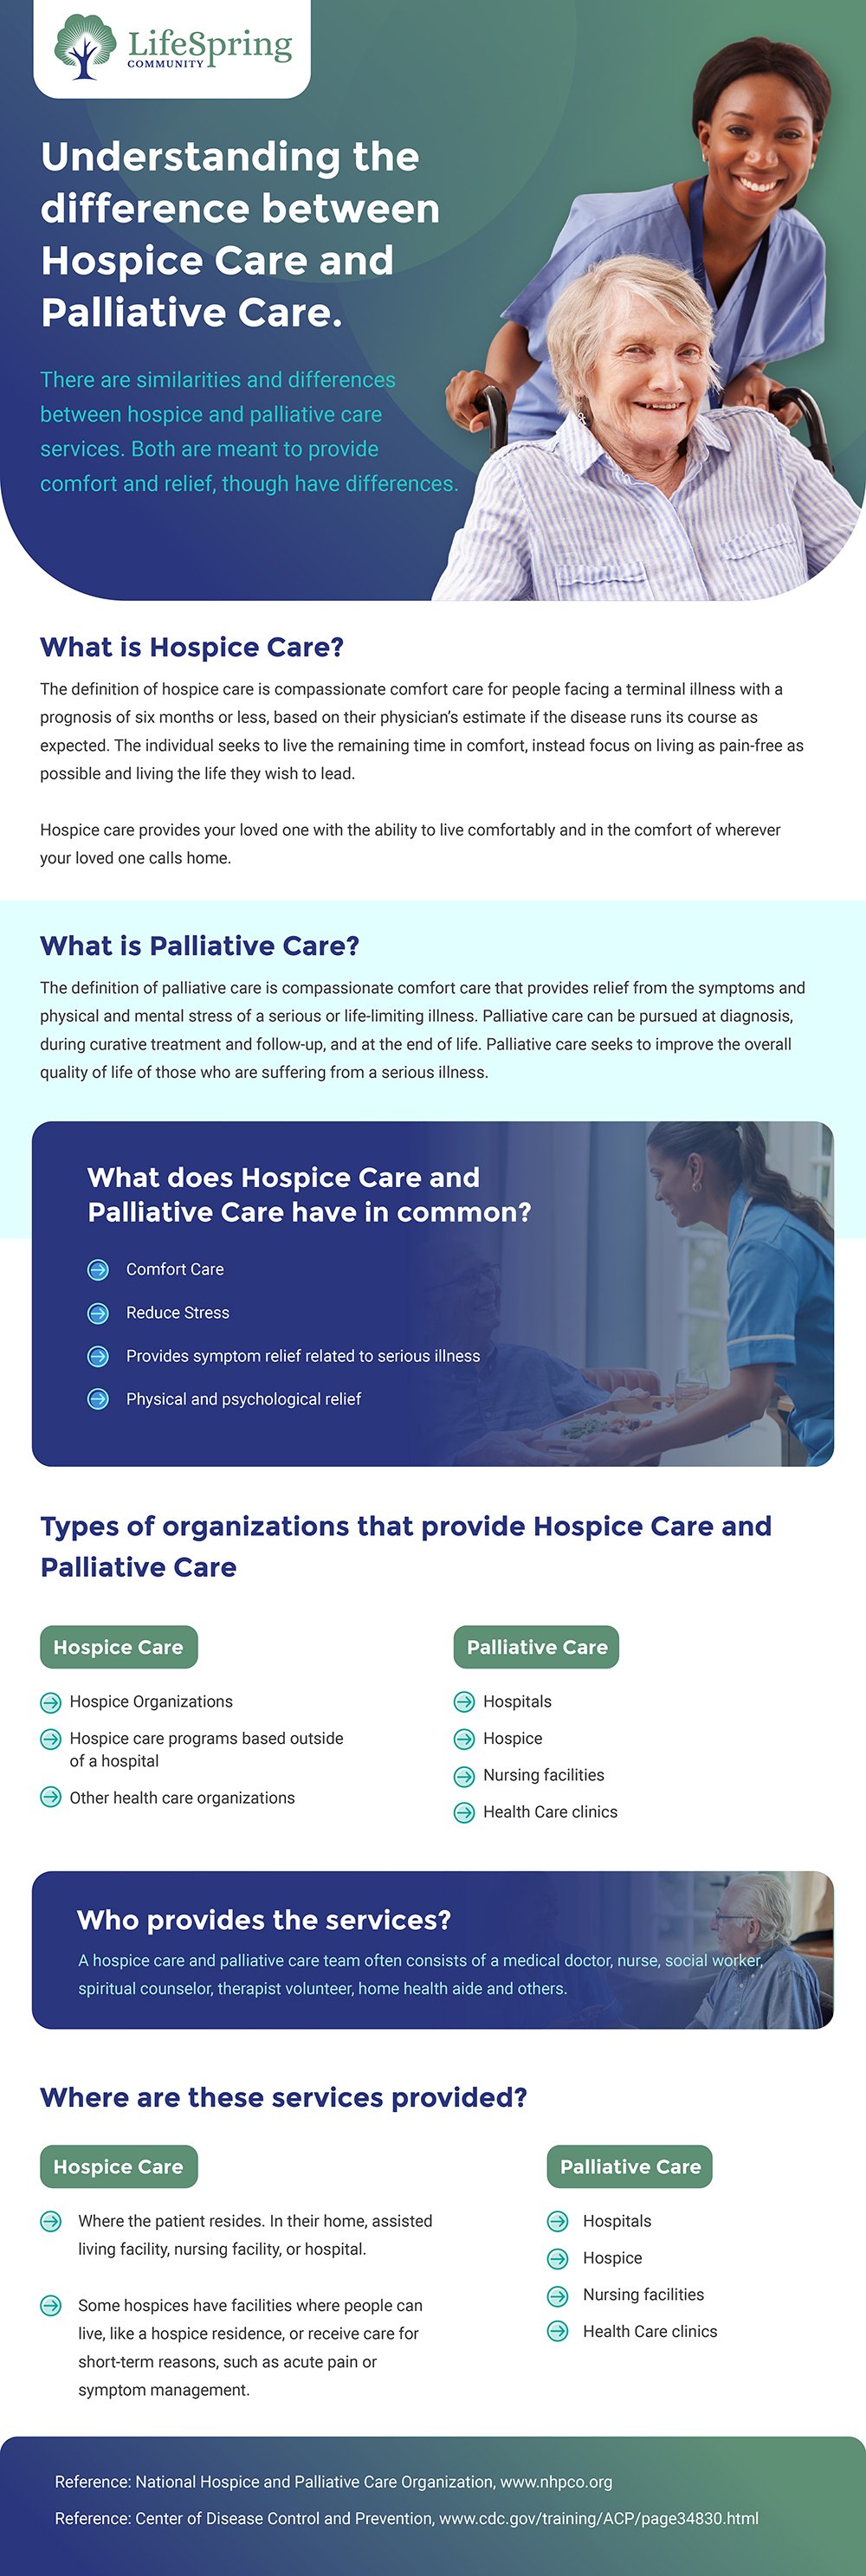 Hospice Care & Palliative Care Infographic-01